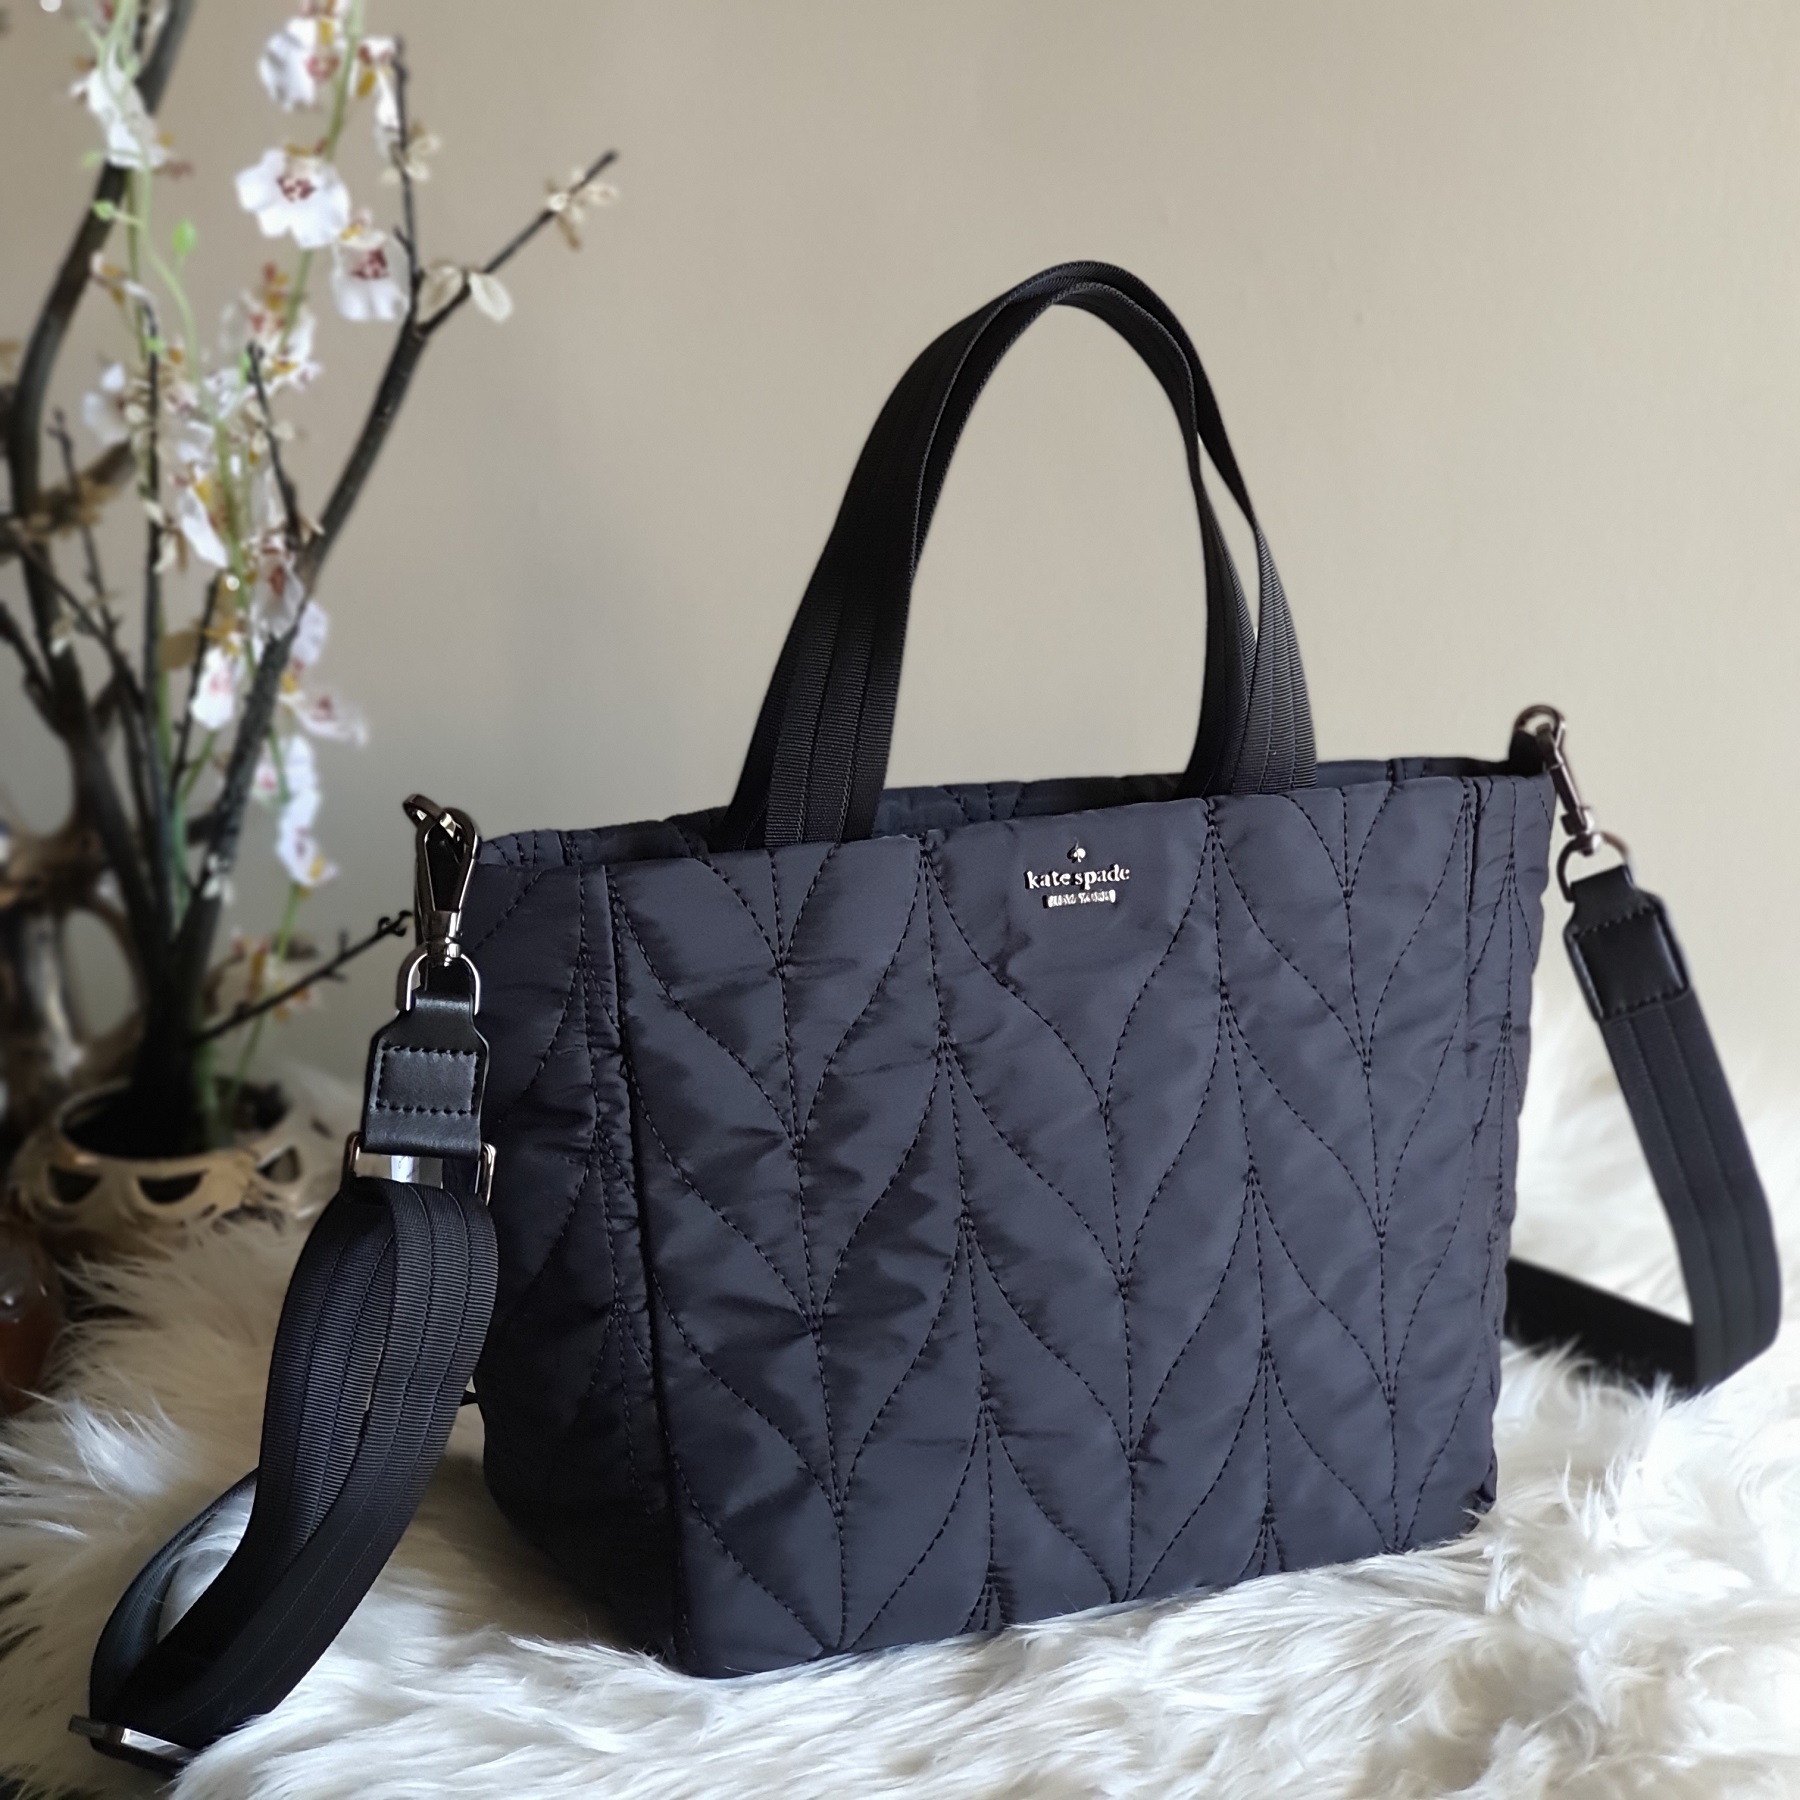 Handbags & Bags Australia | Kate Spade 10% OFF Sign-Up Offer